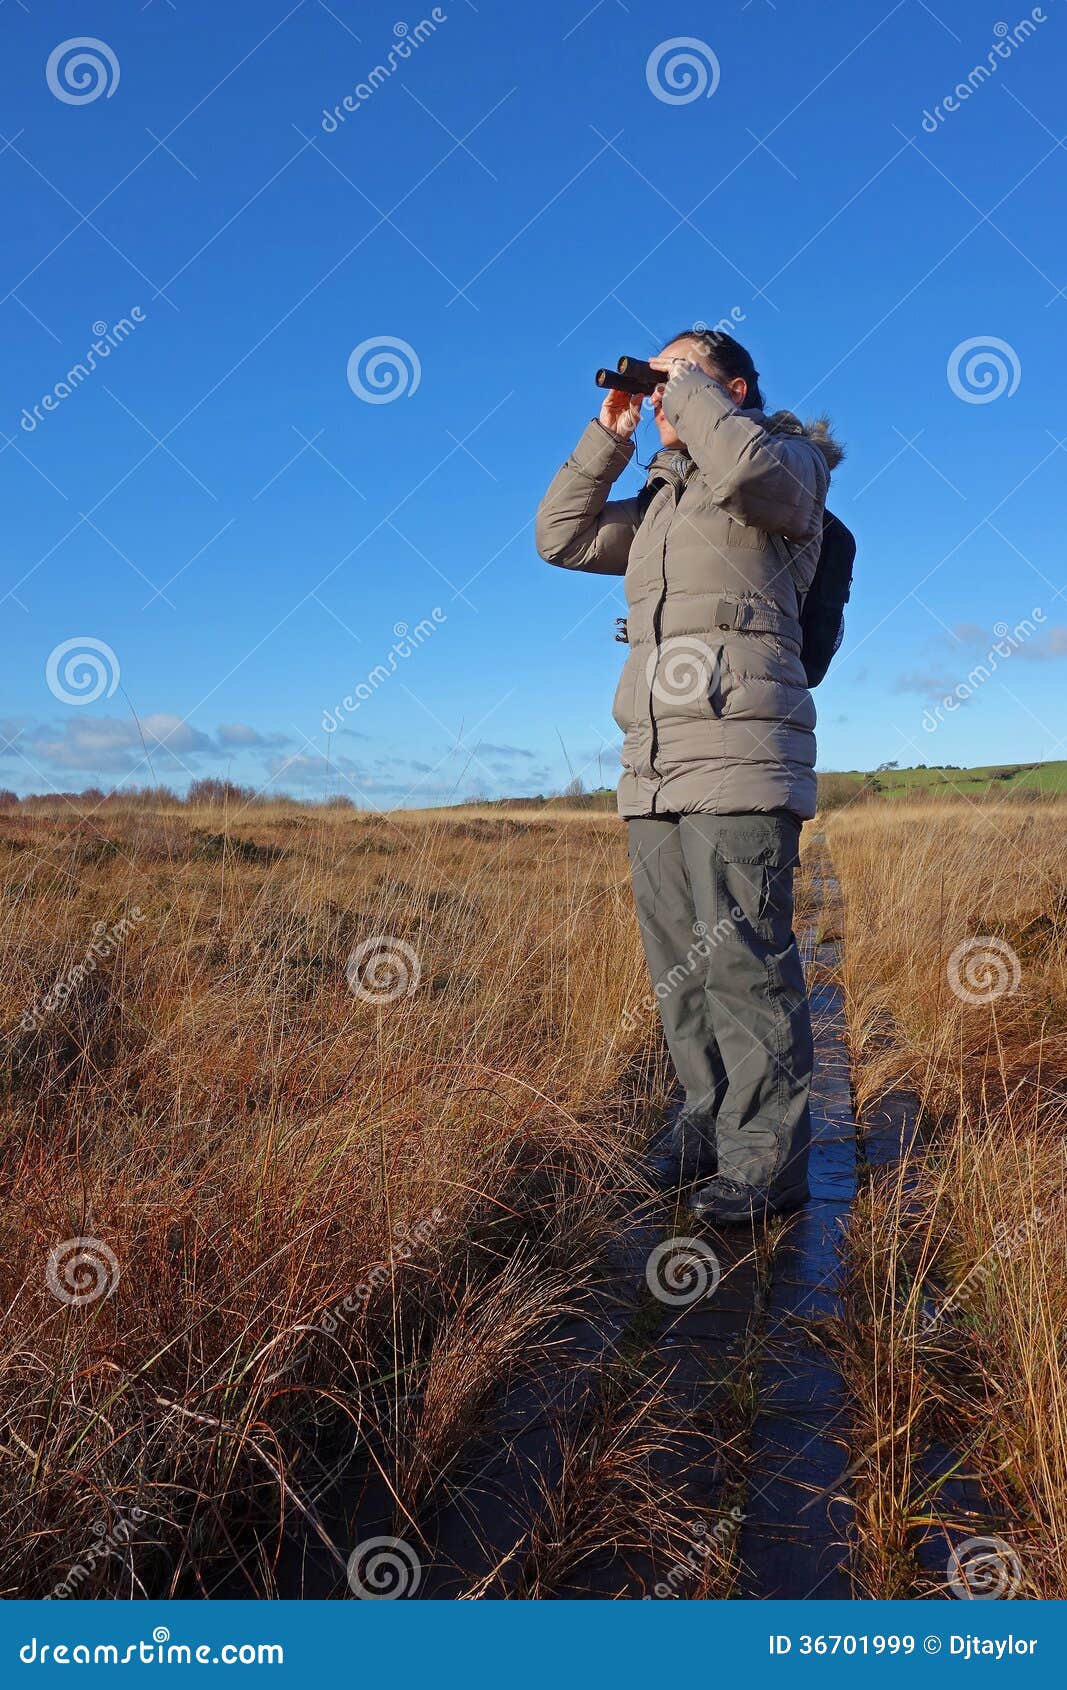 woman with binoculars birdwatching,